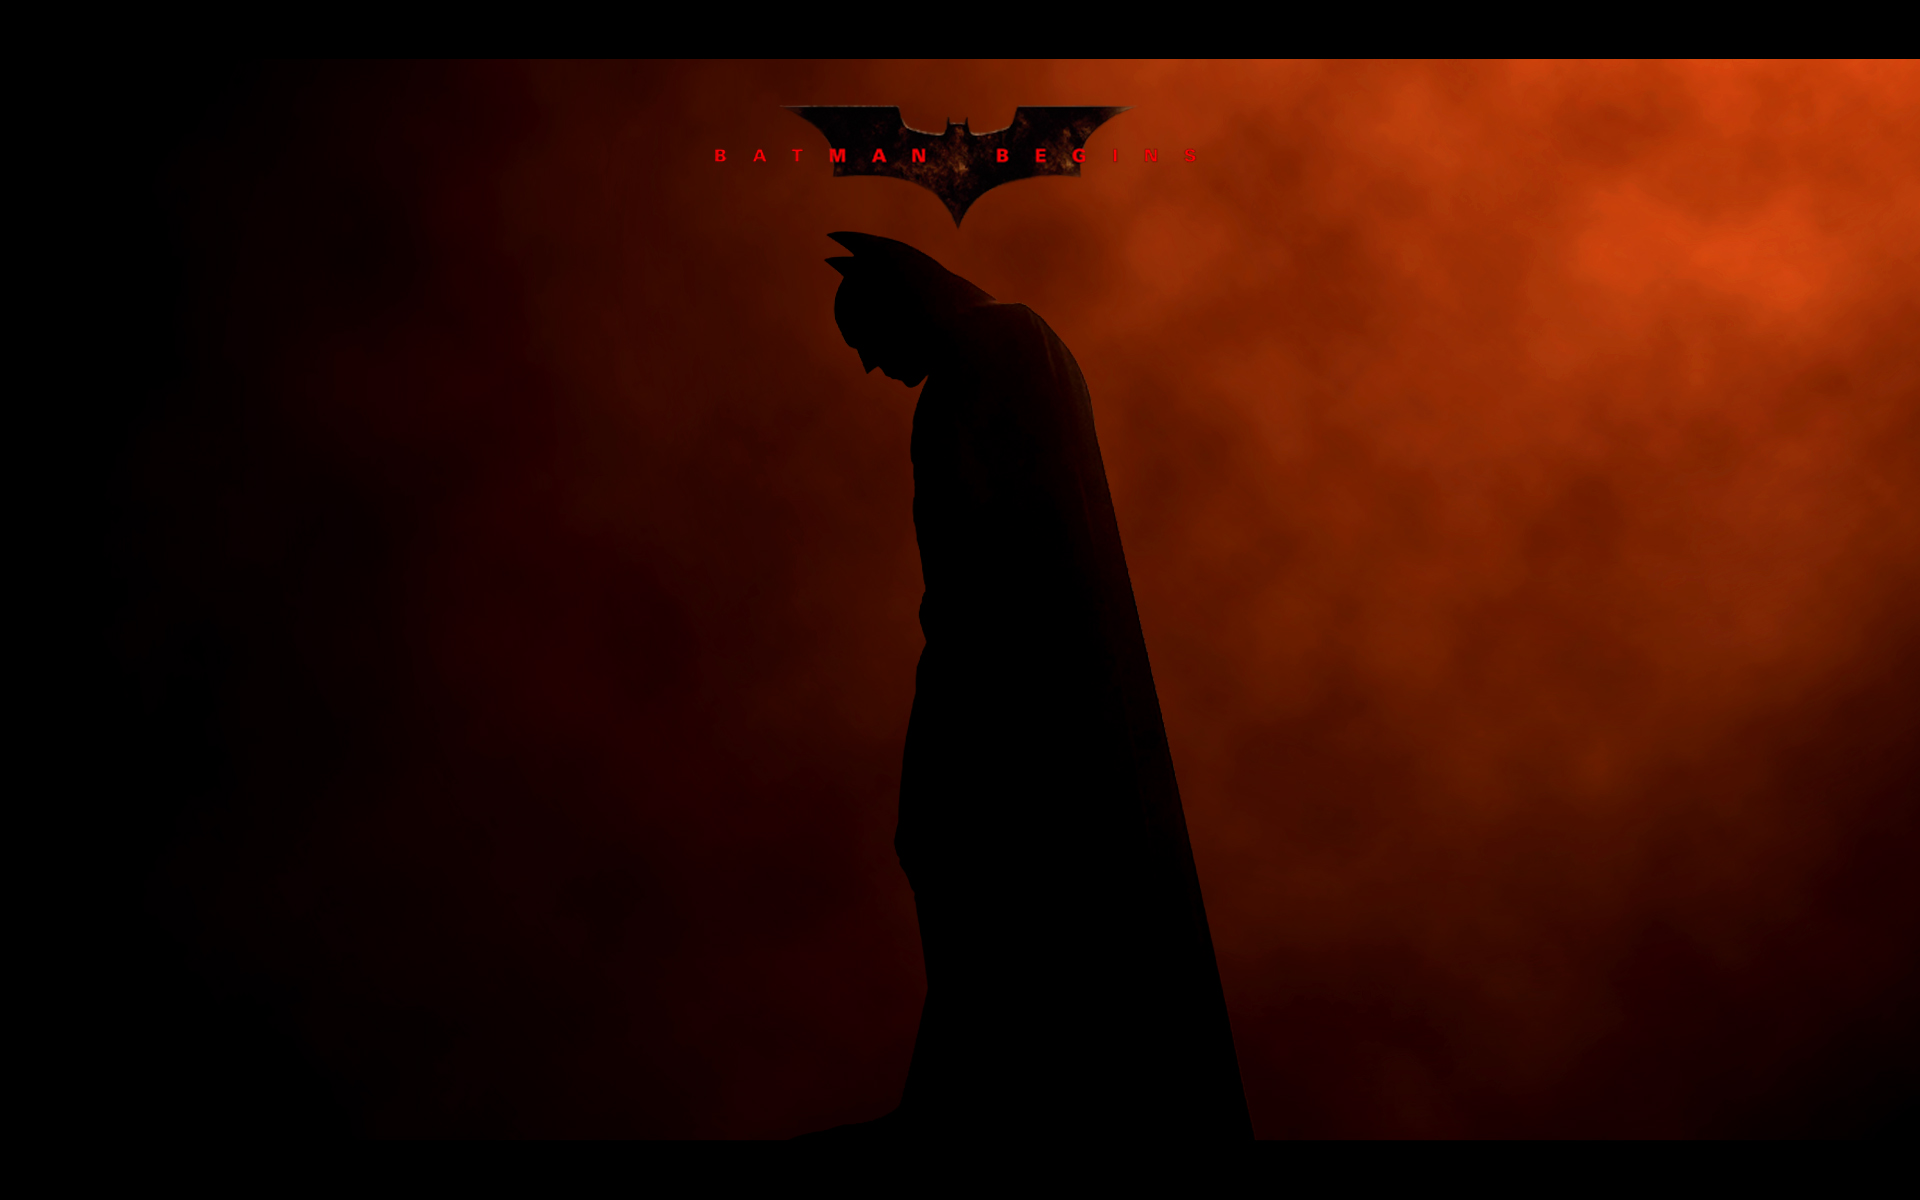 batman begins 4k poster iPhone X Wallpapers Free Download